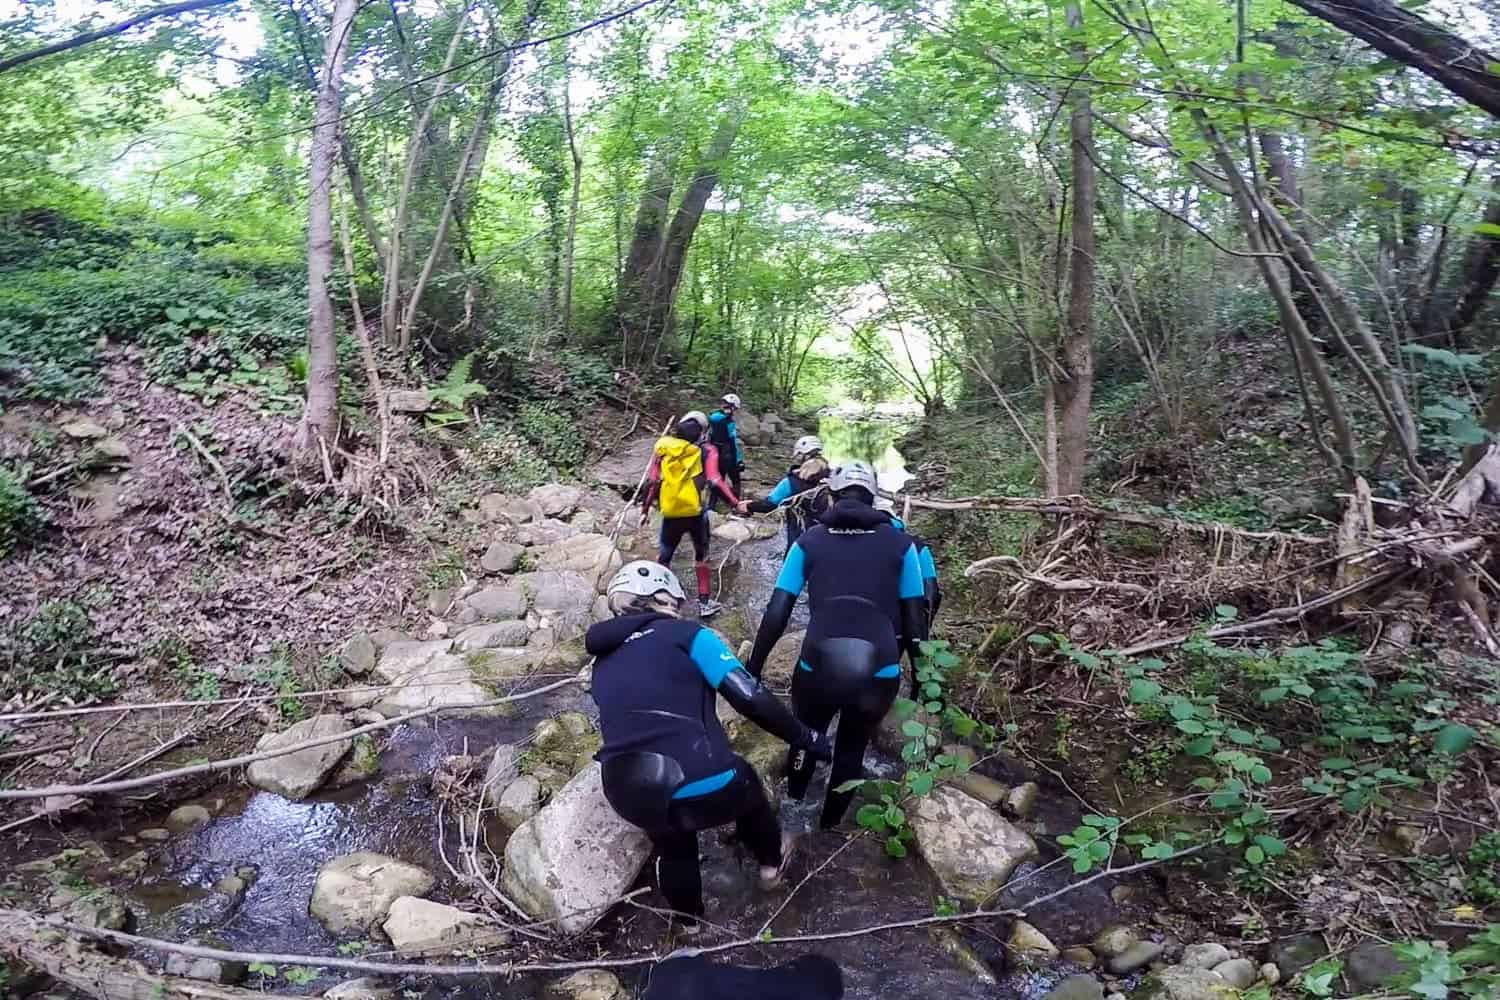 Water trekking in Canet Creek in Girones near Girona, Spain